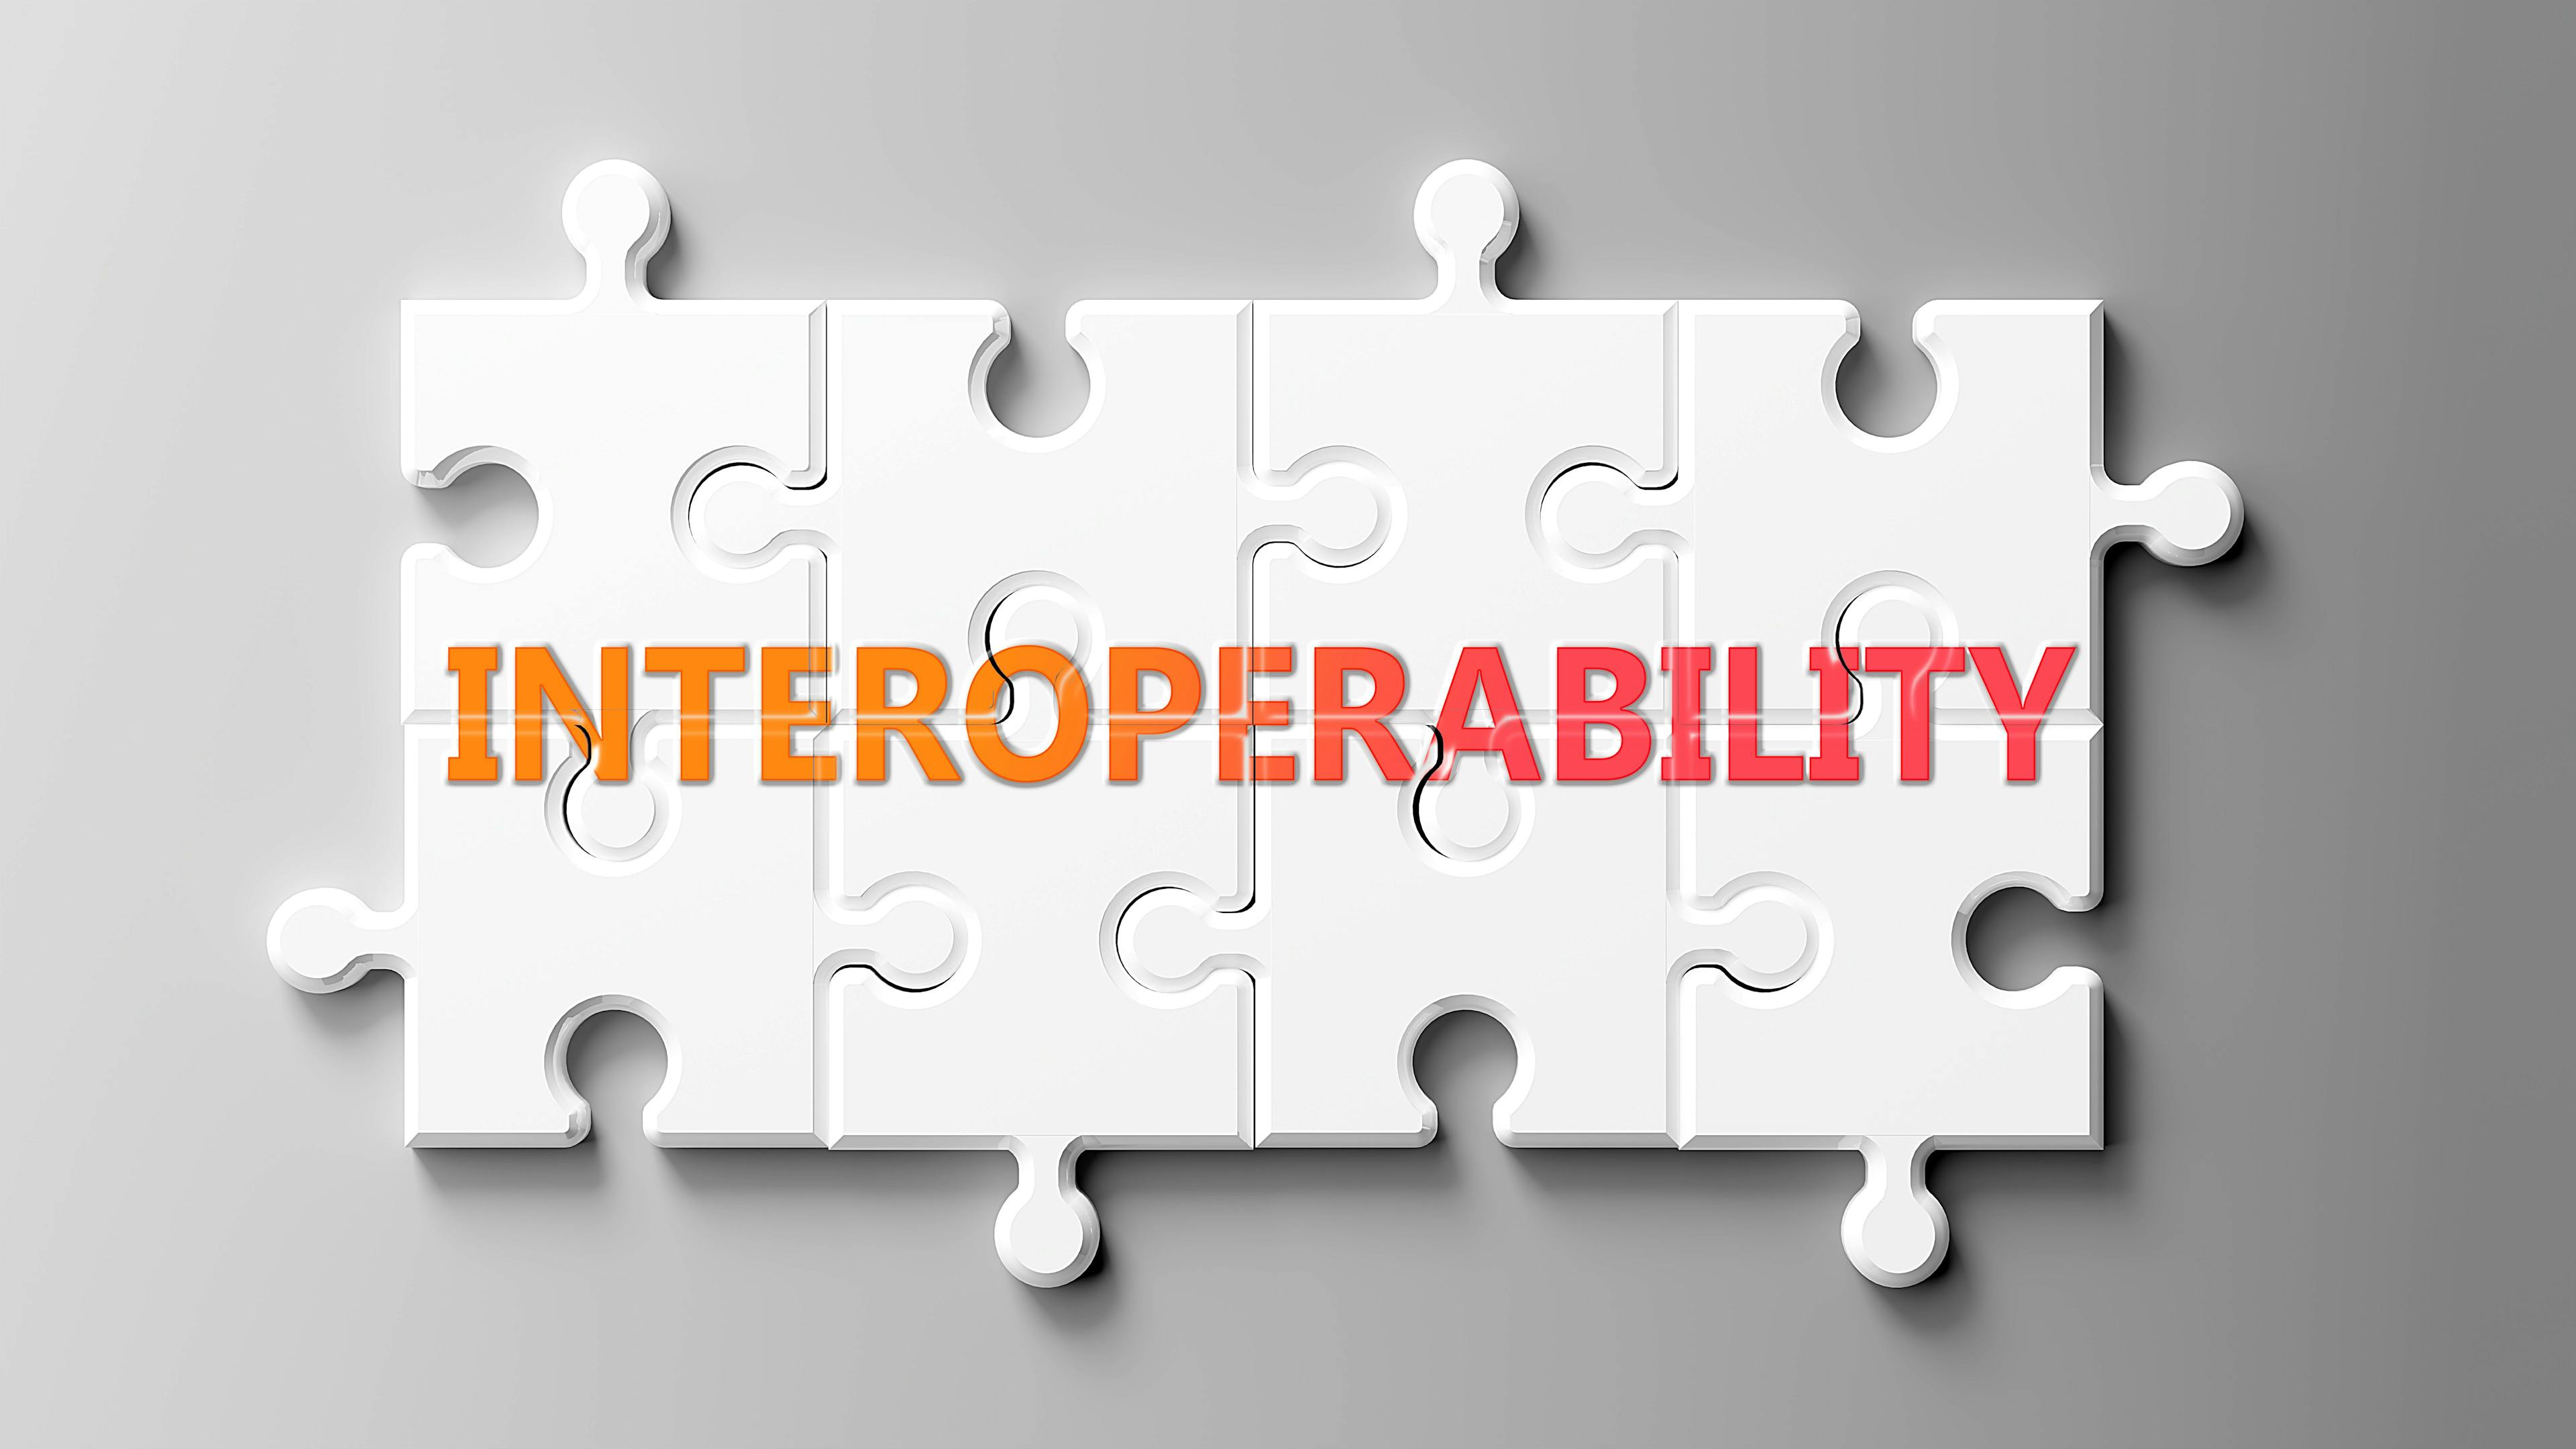 Interoperability as jigsaw puzzle ©GoodIdeas-stock.adobe.com